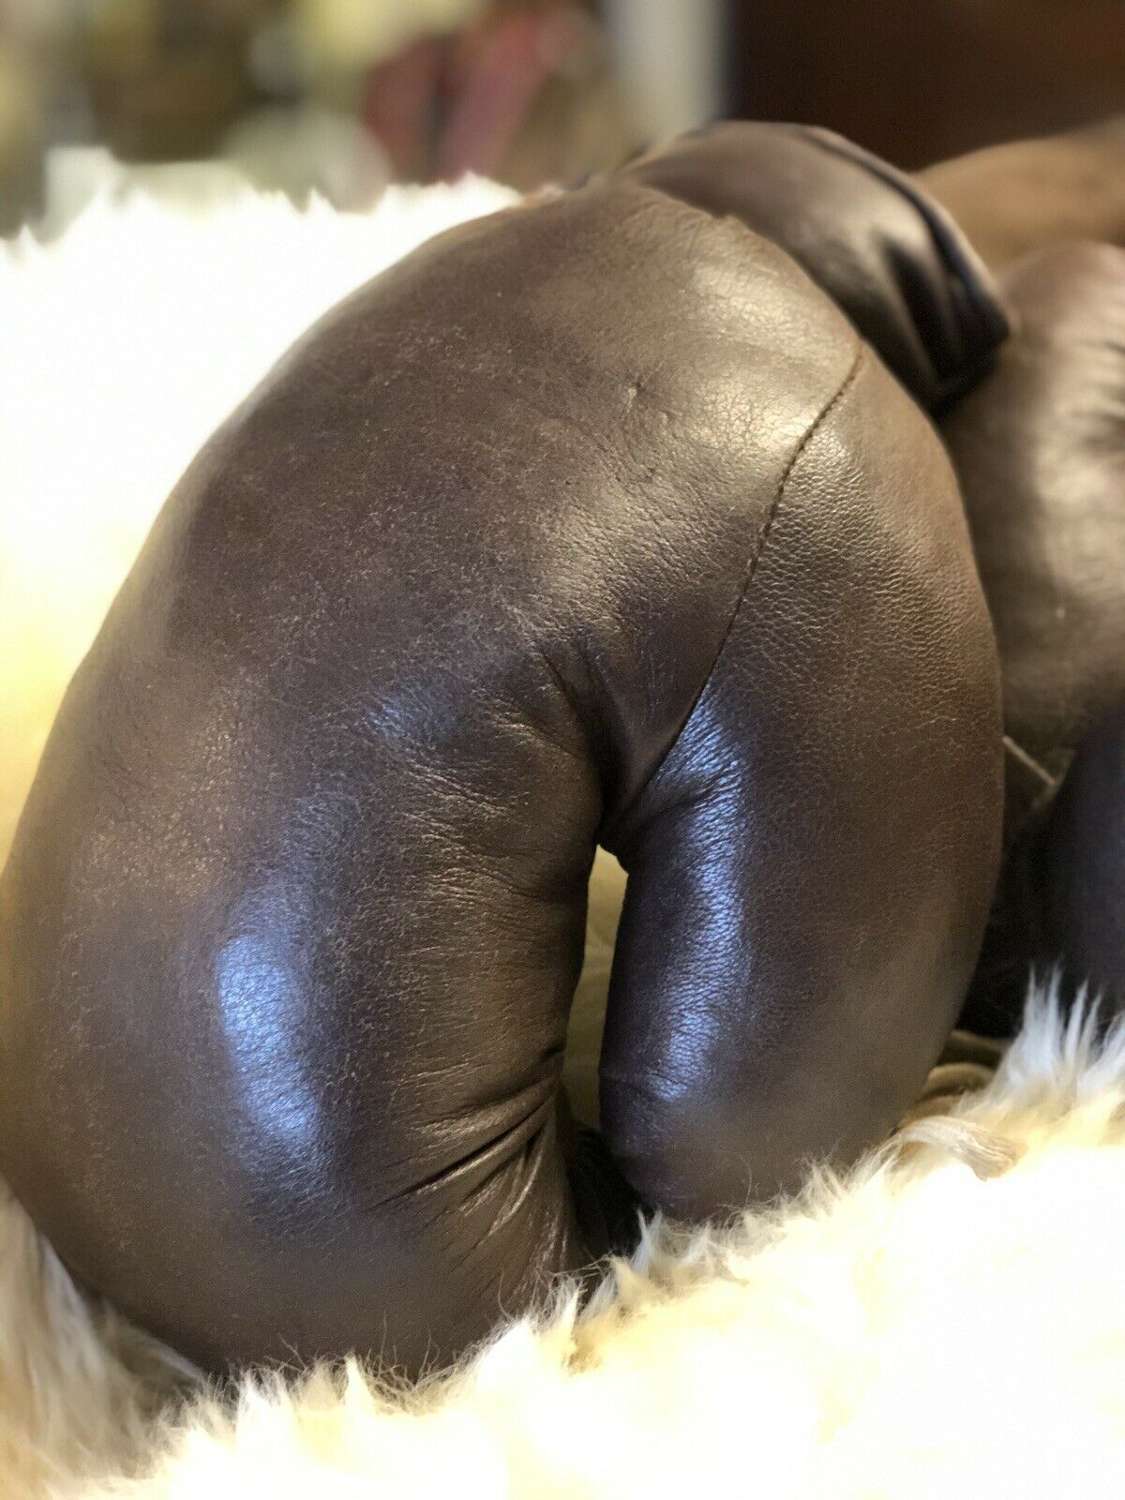 Vintage leather boxing gloves